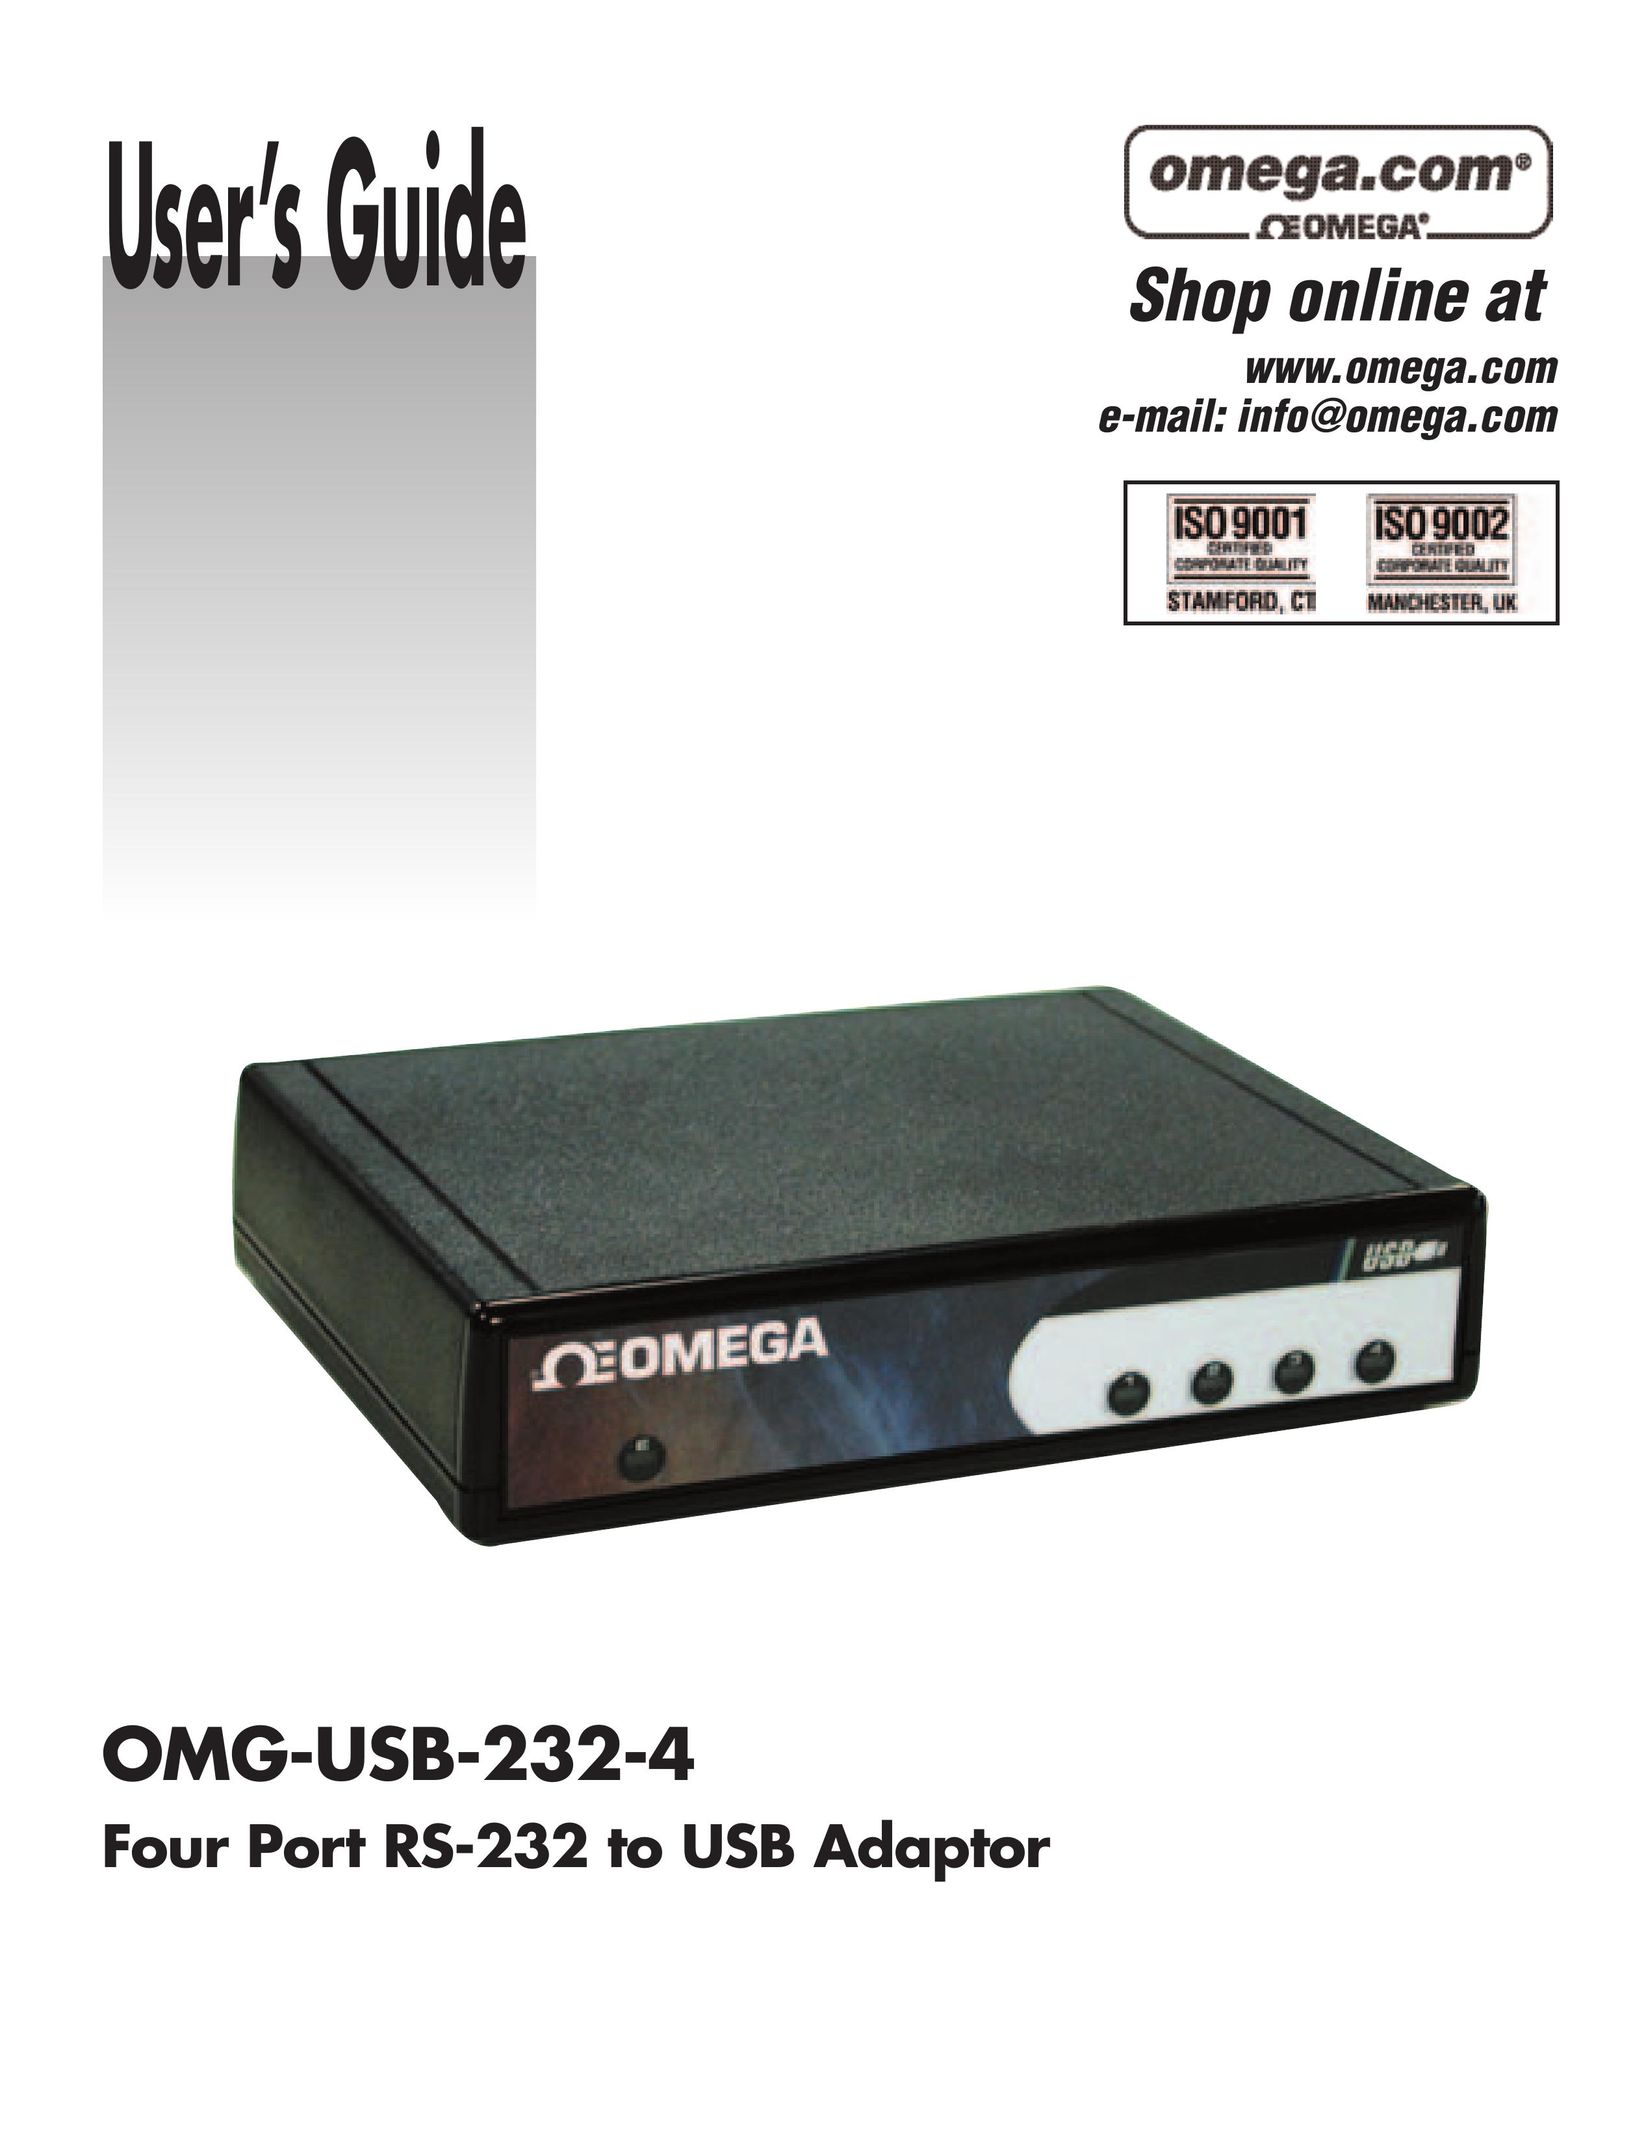 Omega Vehicle Security OMG-USB-232-4 Network Card User Manual